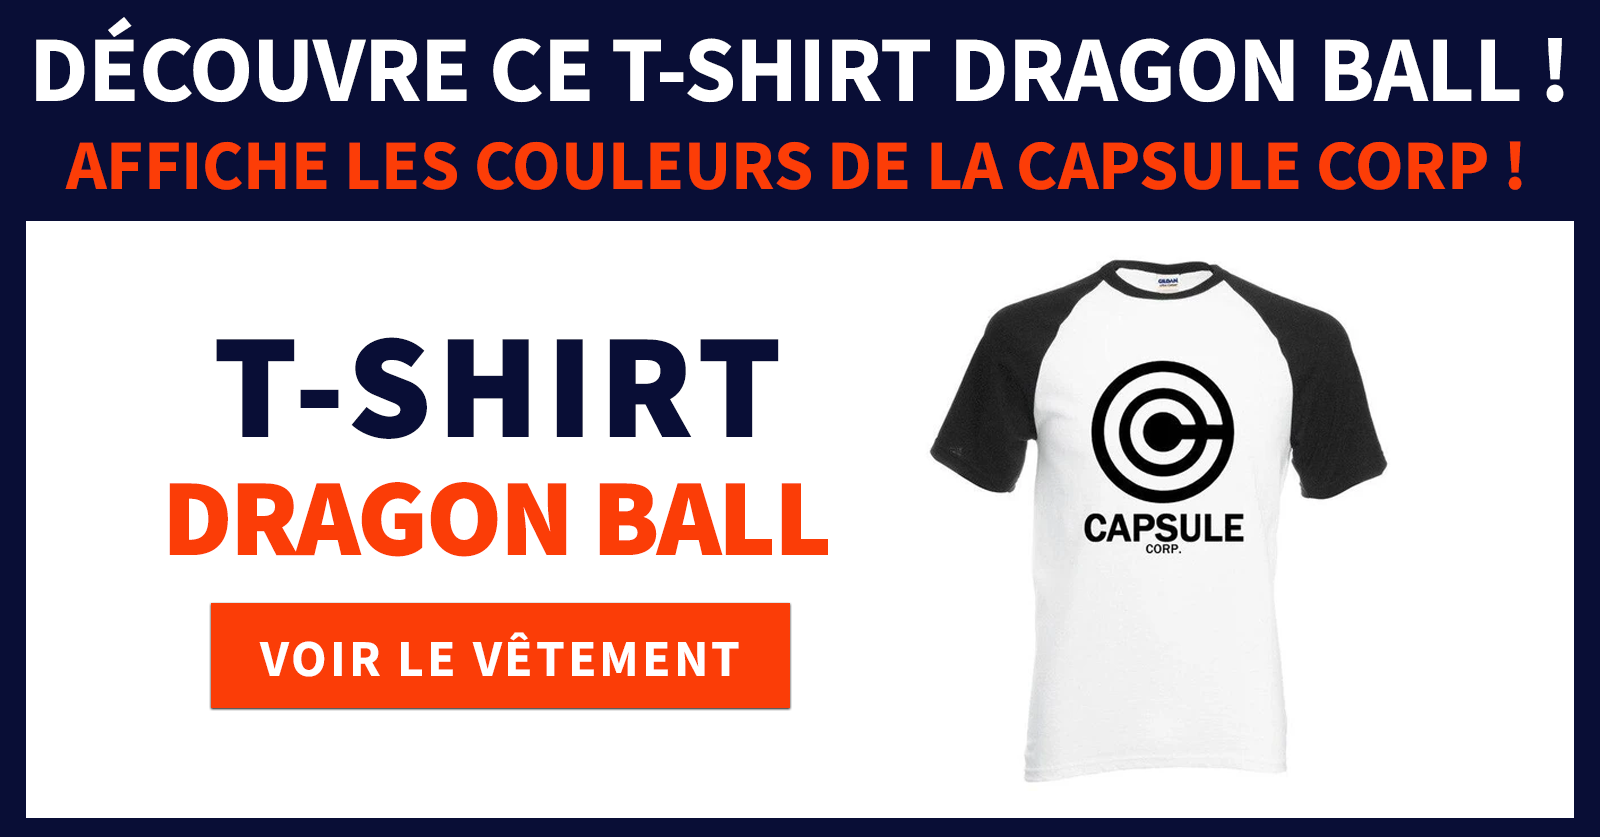 Capsule corp t-shirt